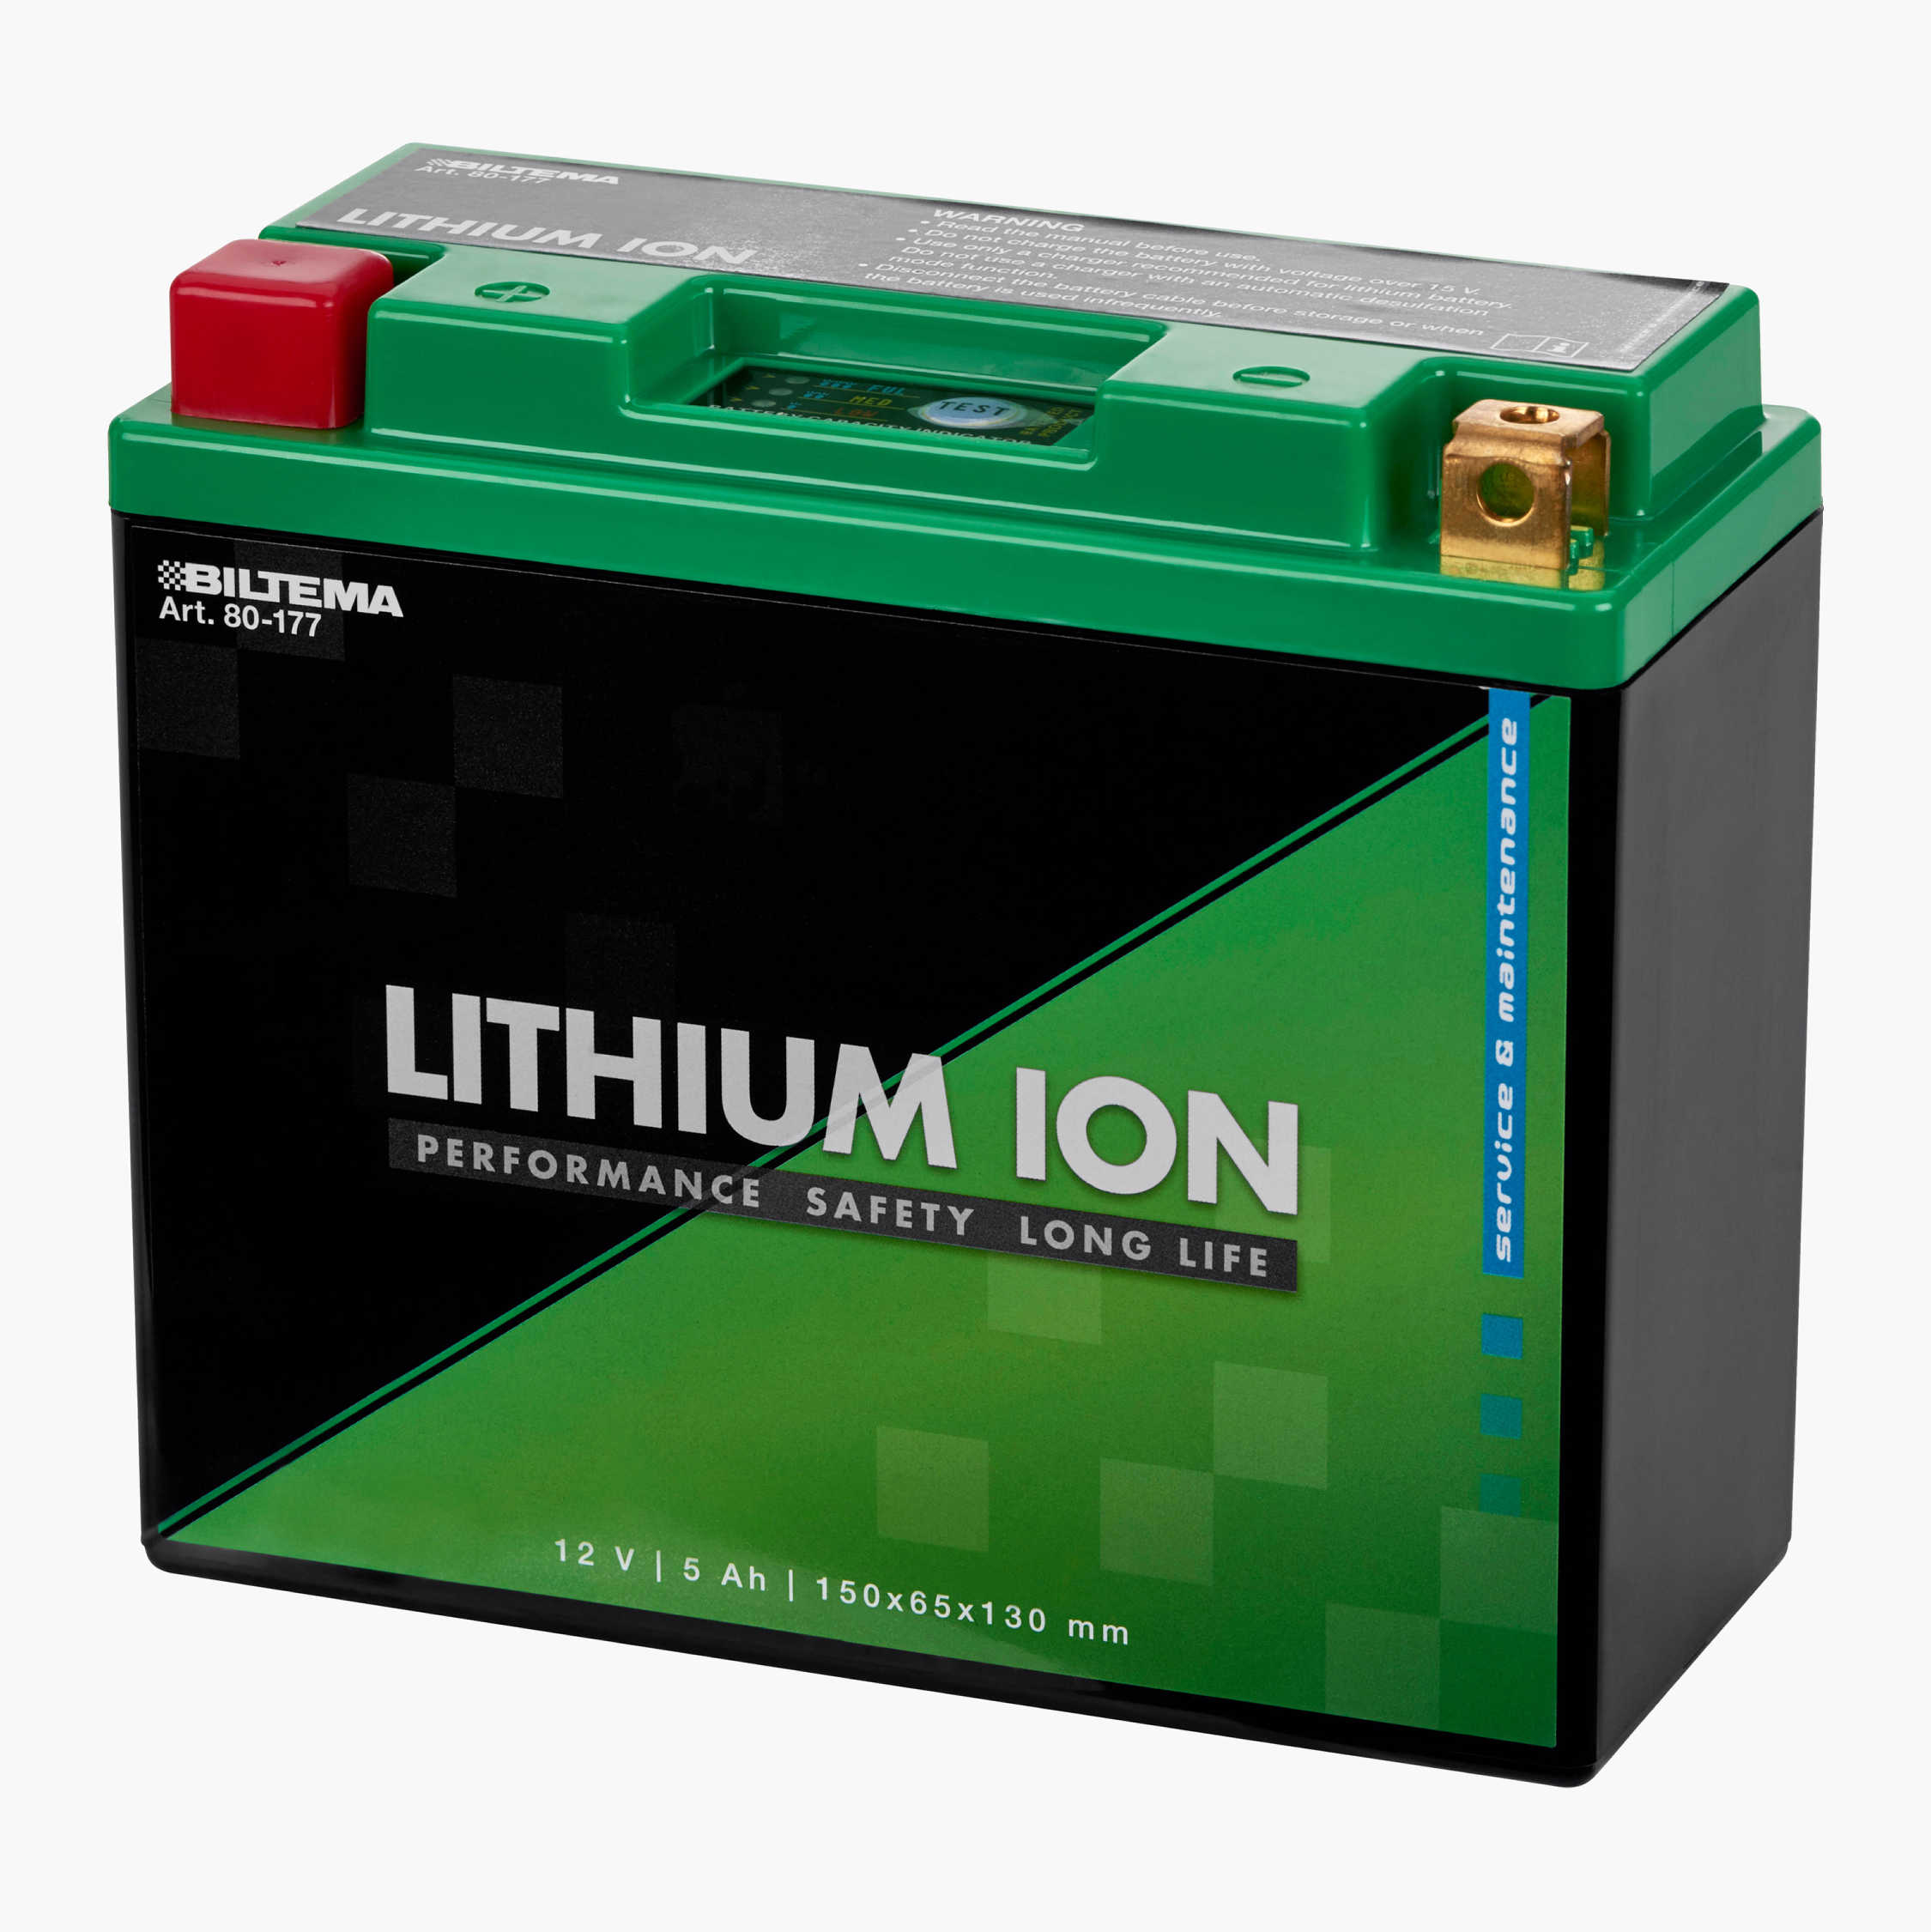 pilot forlade nødvendig Litiumbatteri Litium LiFePO4, 12 V, 5 Ah, 150 x 65 x 130 mm - Biltema.dk